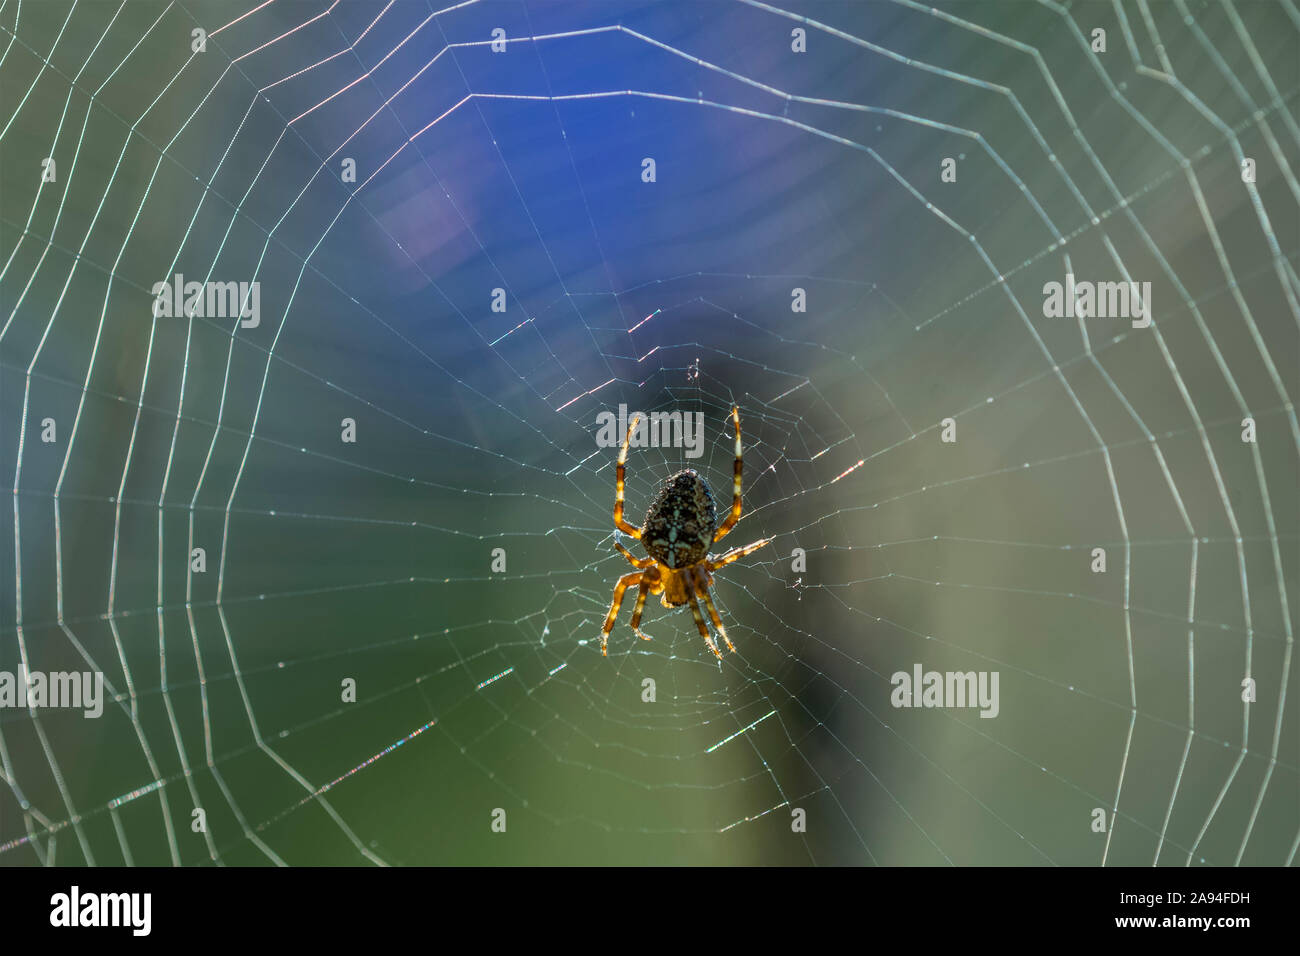 European Garden Spiders (Araneus diadematus) spin webs in late summer; Astoria, Oregon, United States of America Stock Photo